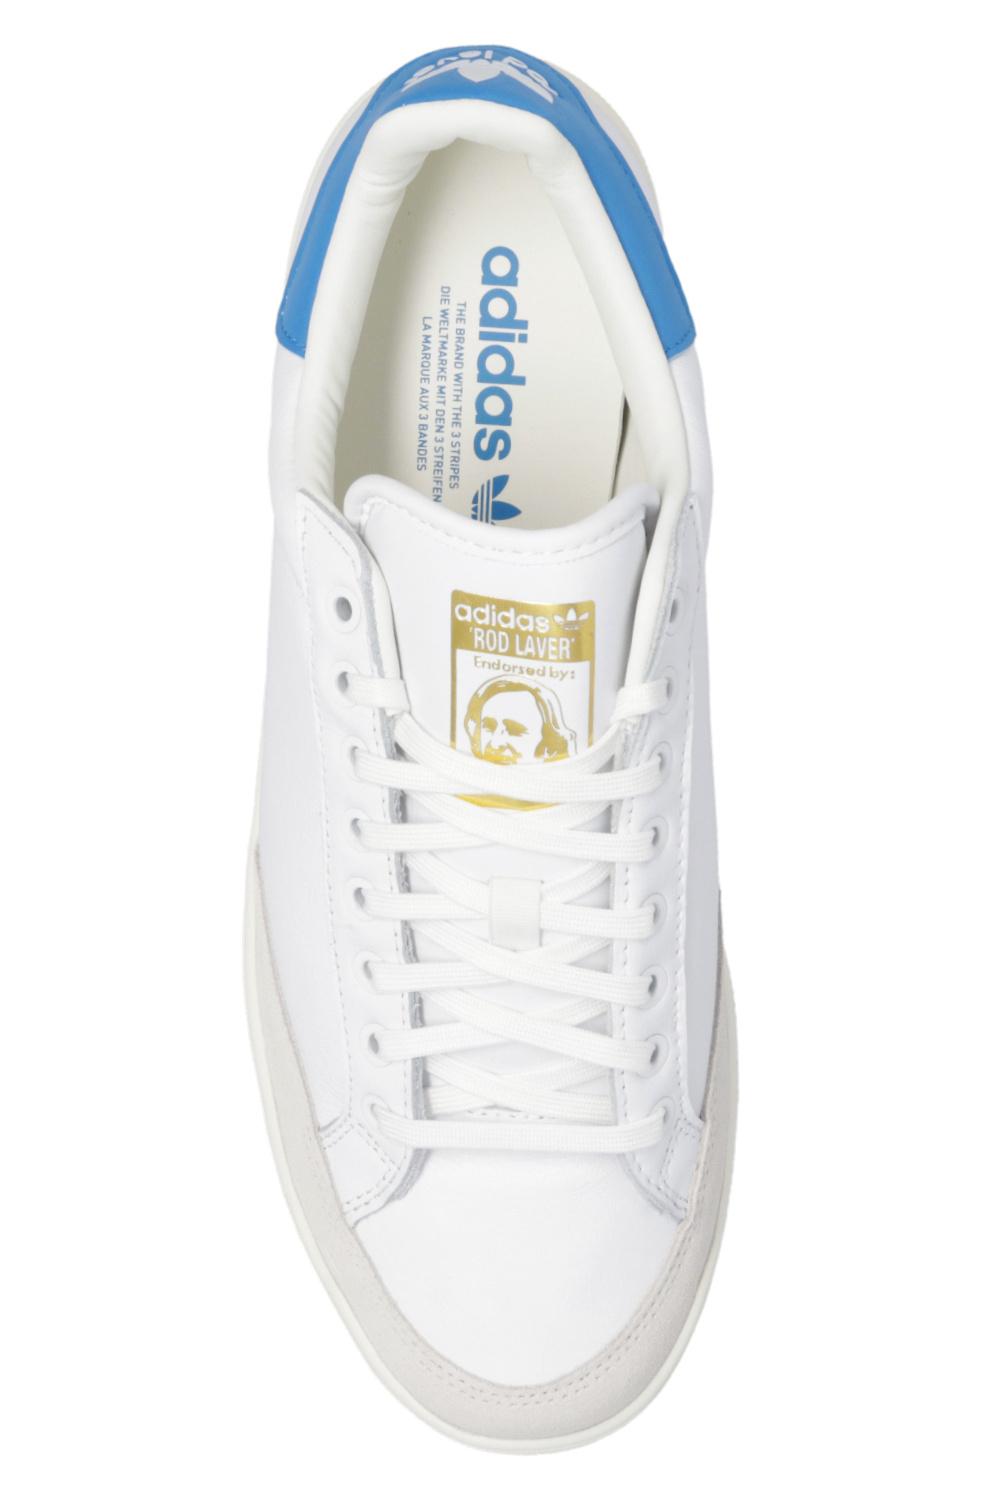 adidas Originals 'rod Laver' Sneakers in White for Men | Lyst